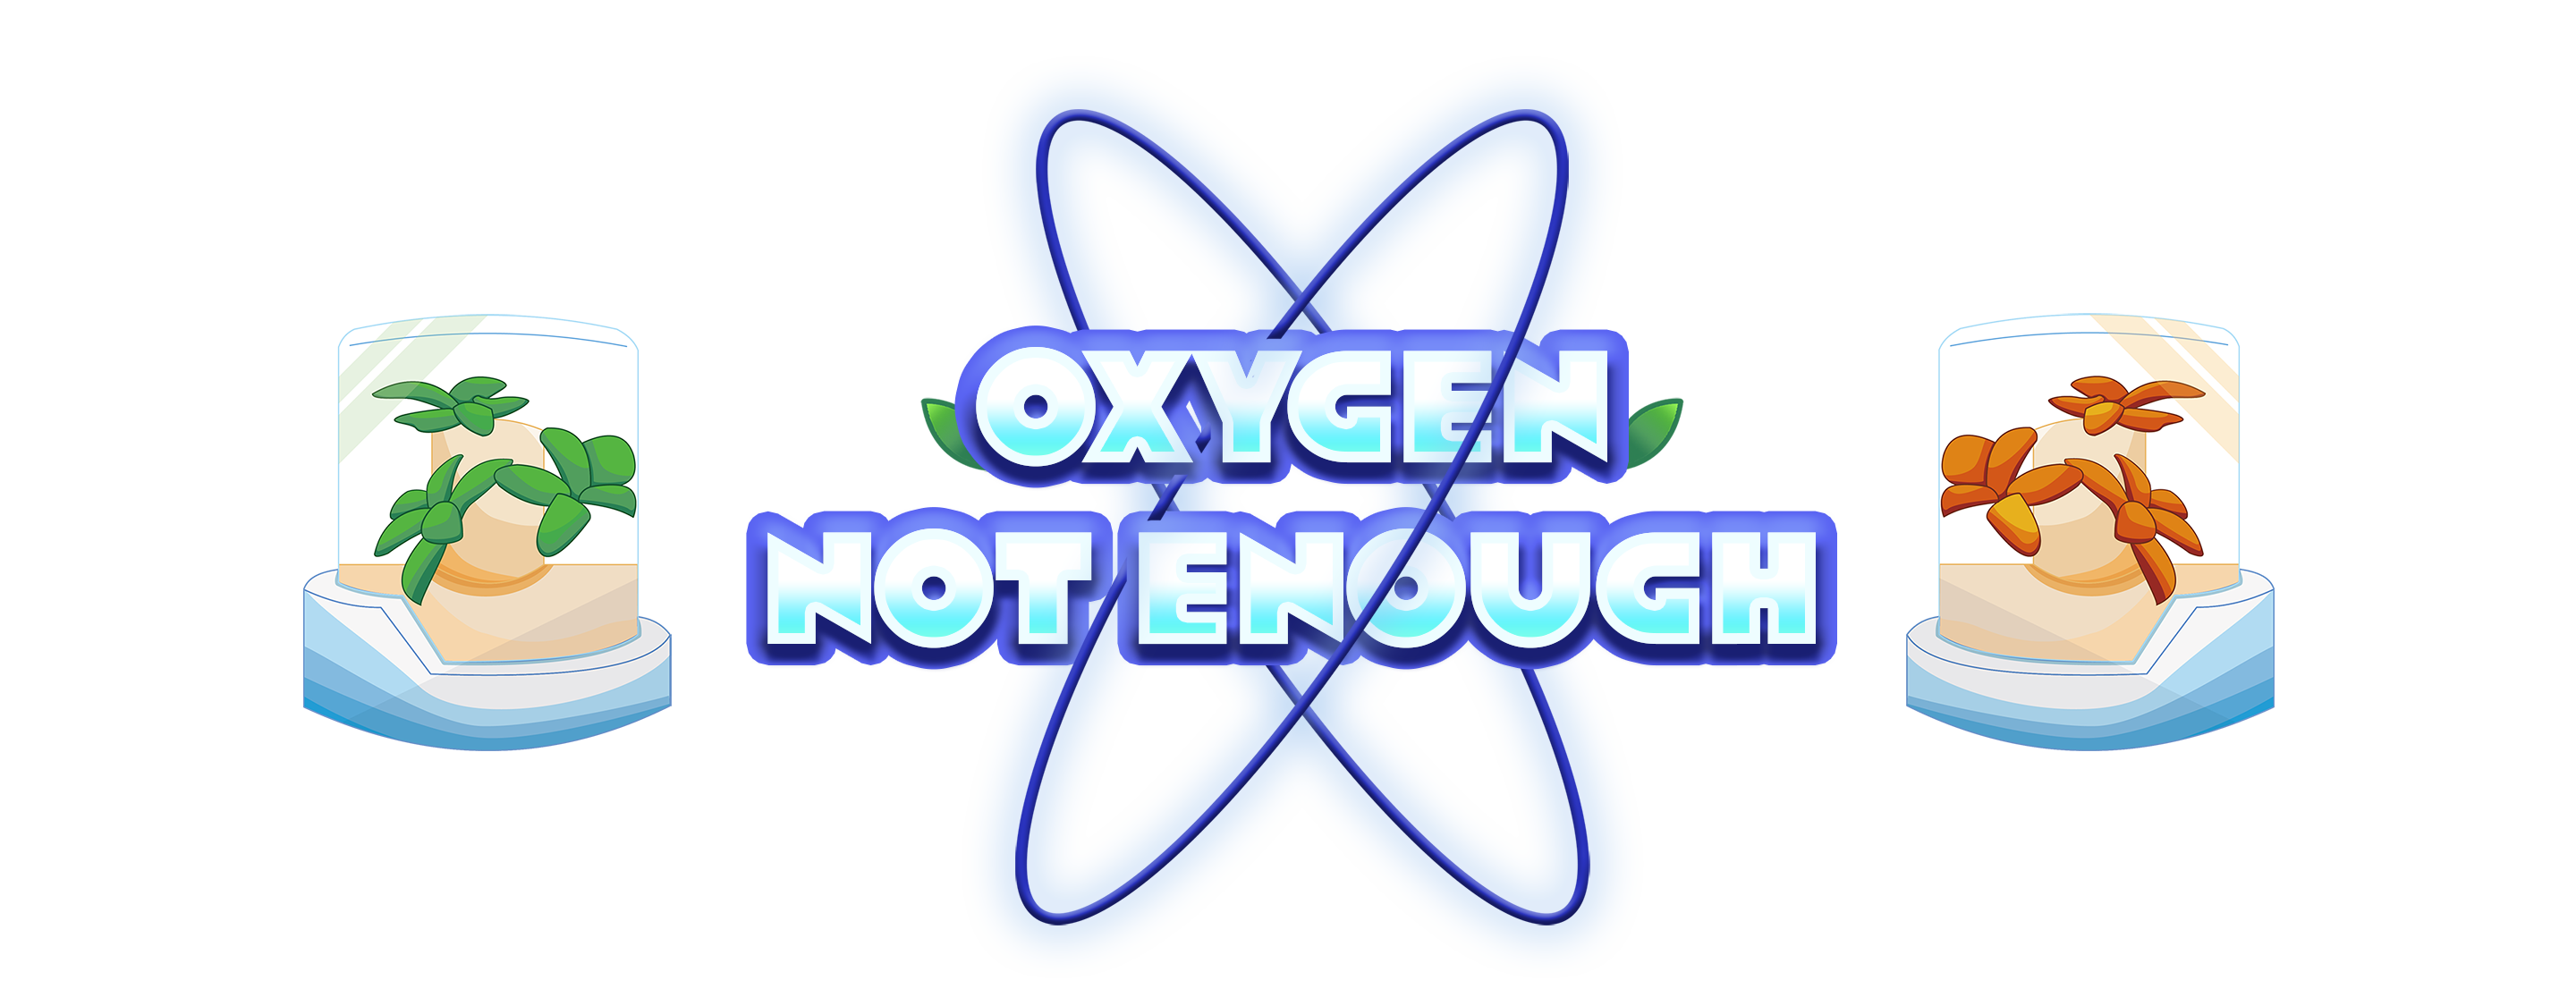 Oxygen Not Enough